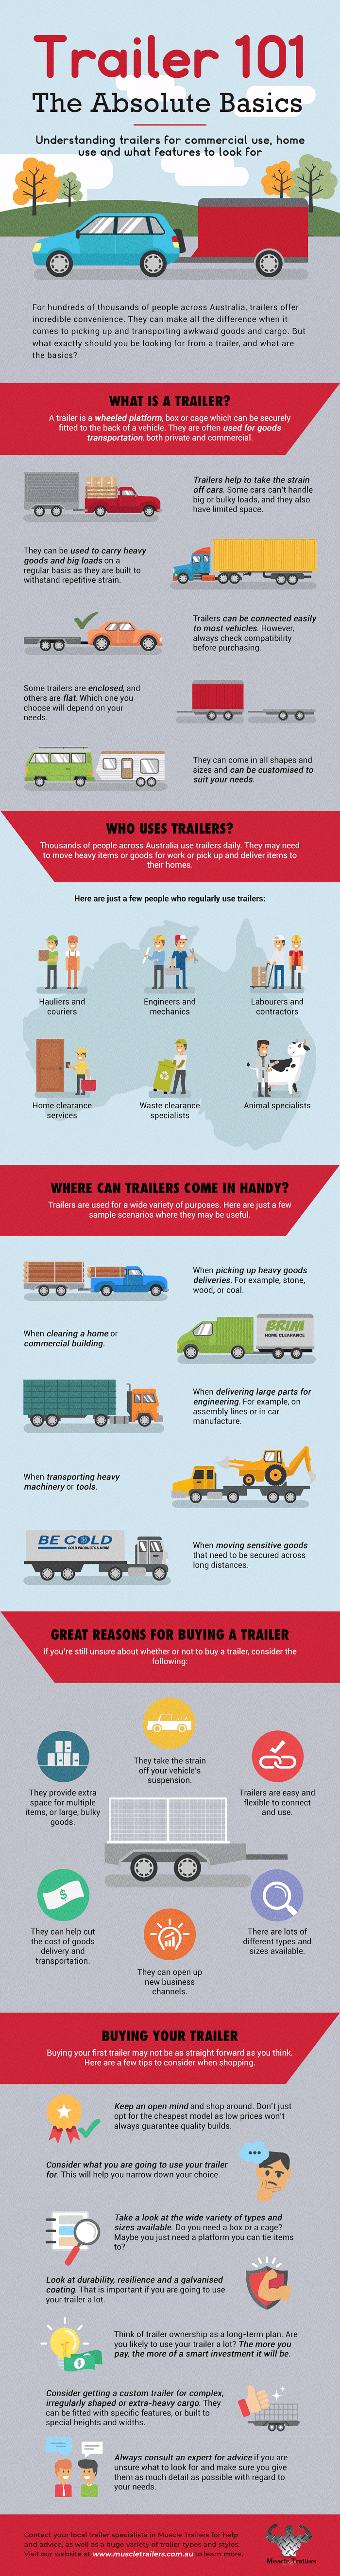 trailer basics infographic